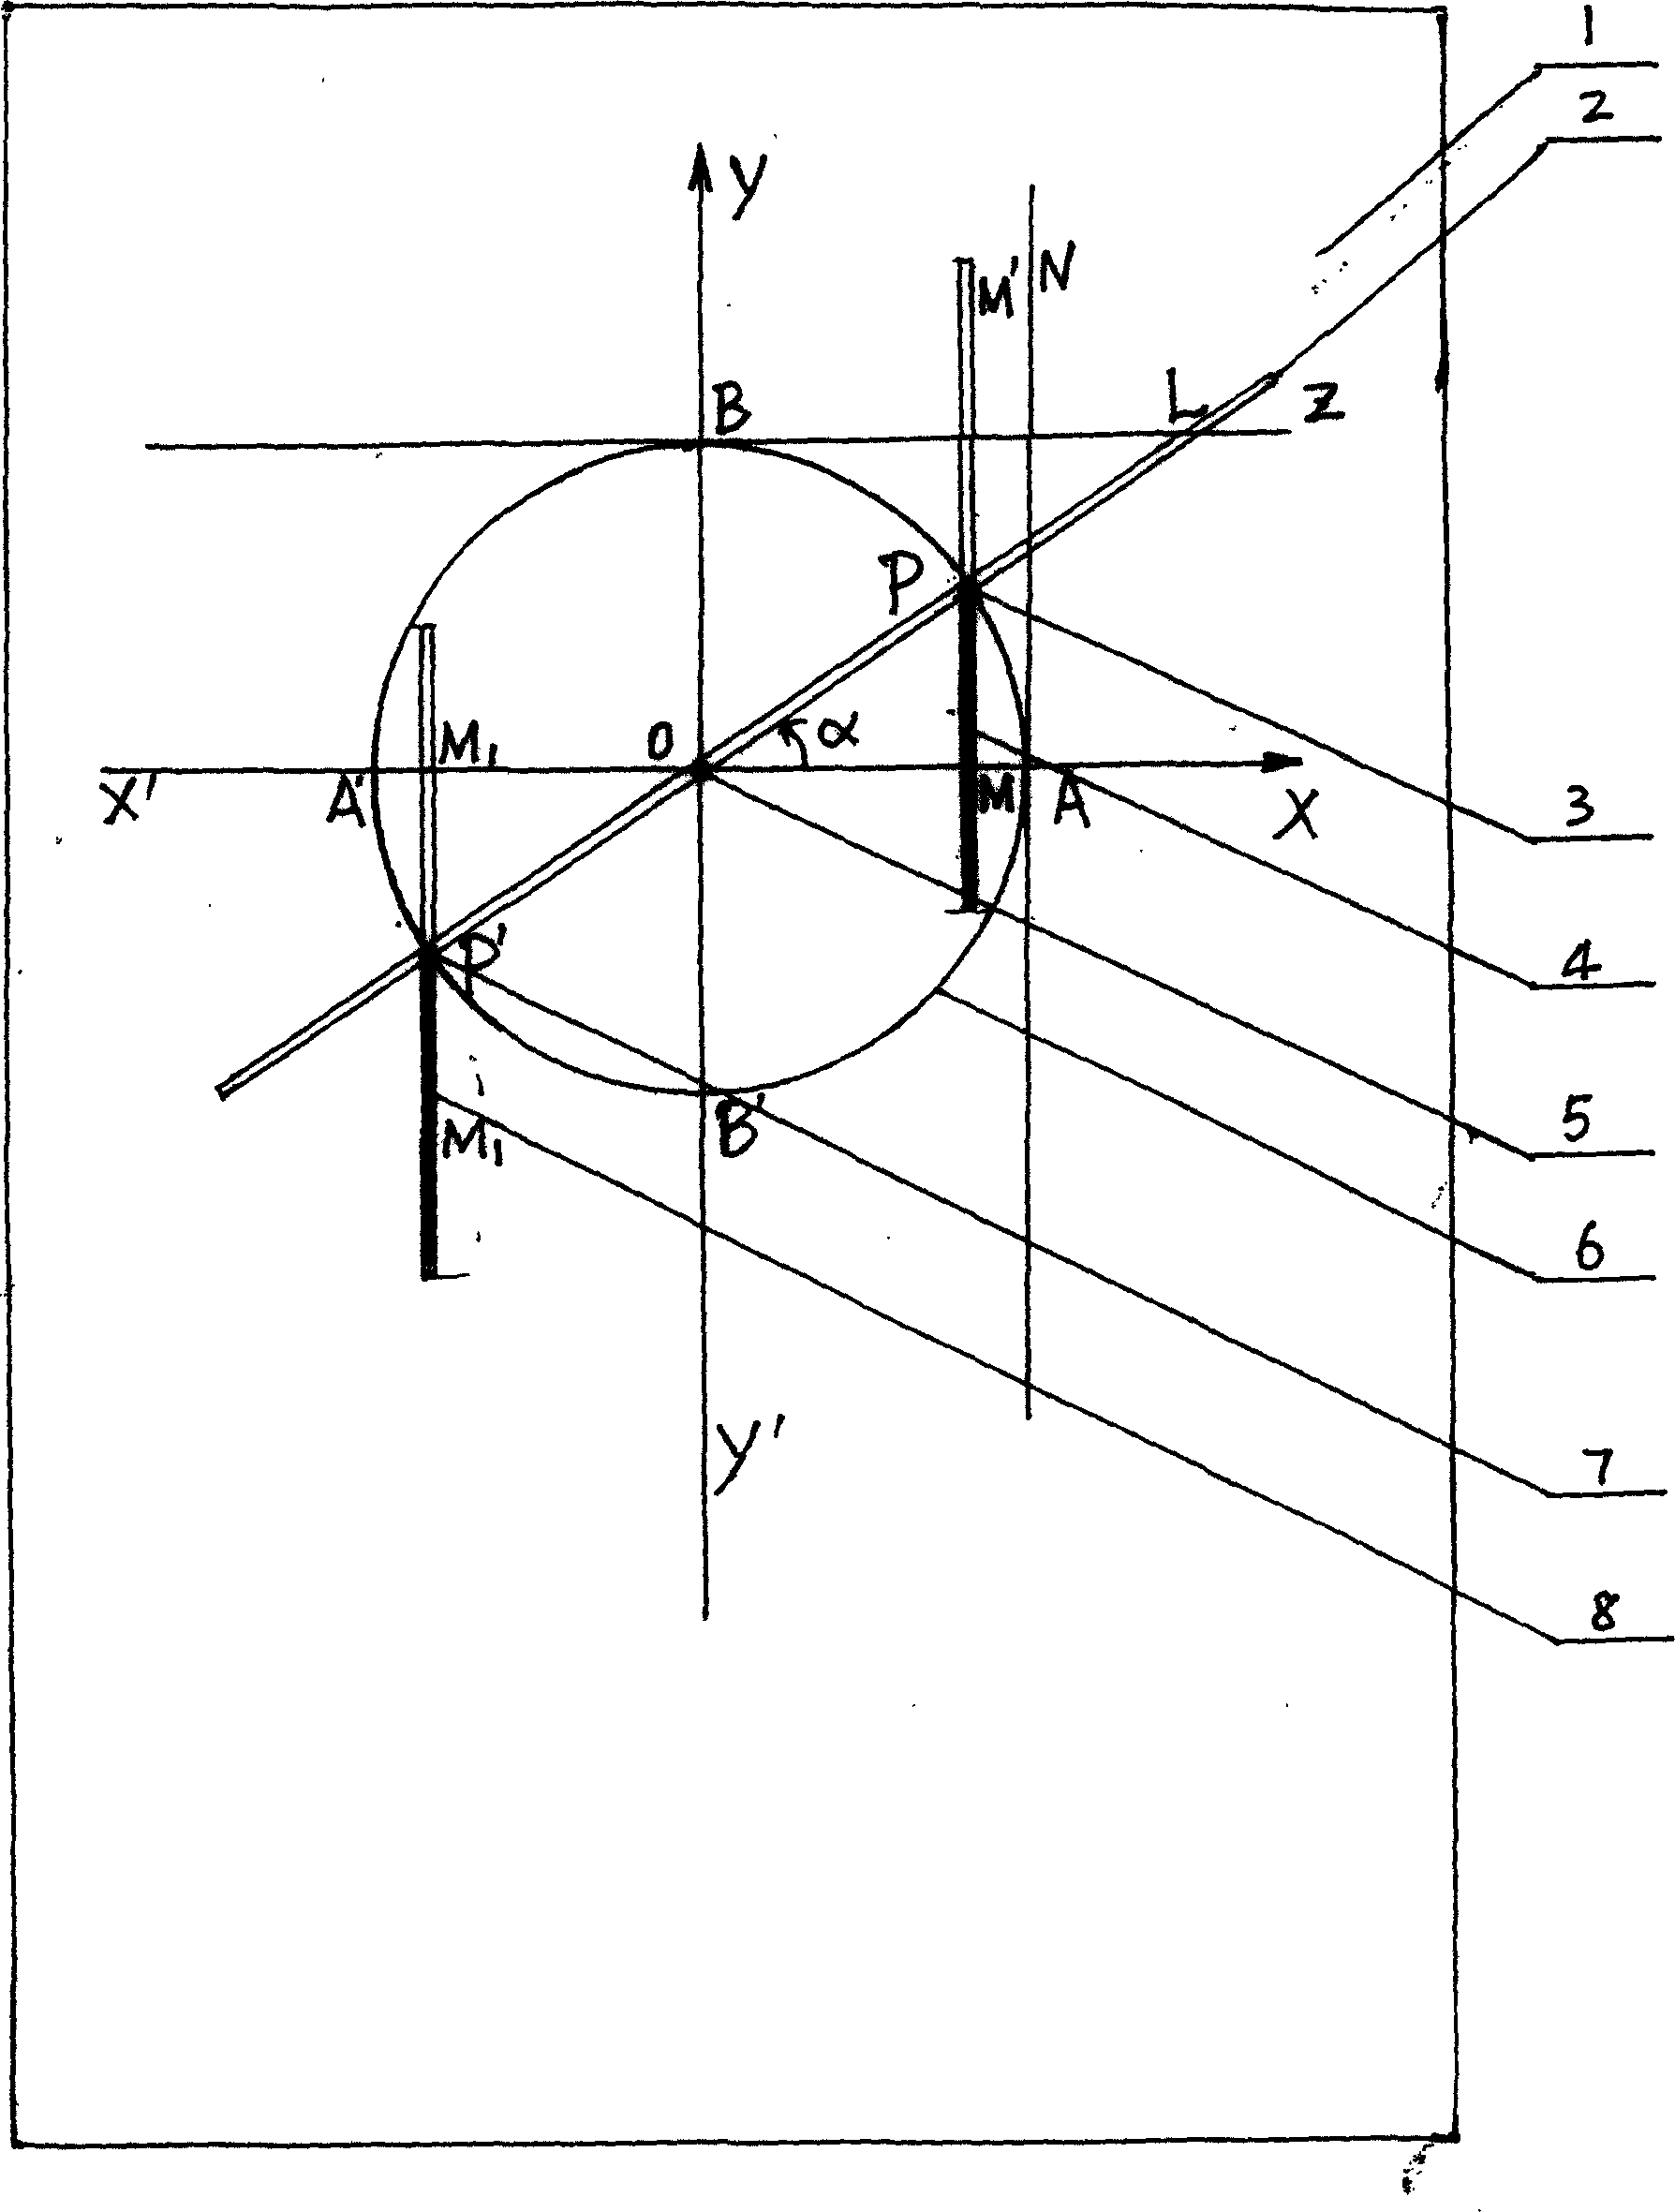 Double sine line bar rod full function triangular function and plane geometry demonstrator